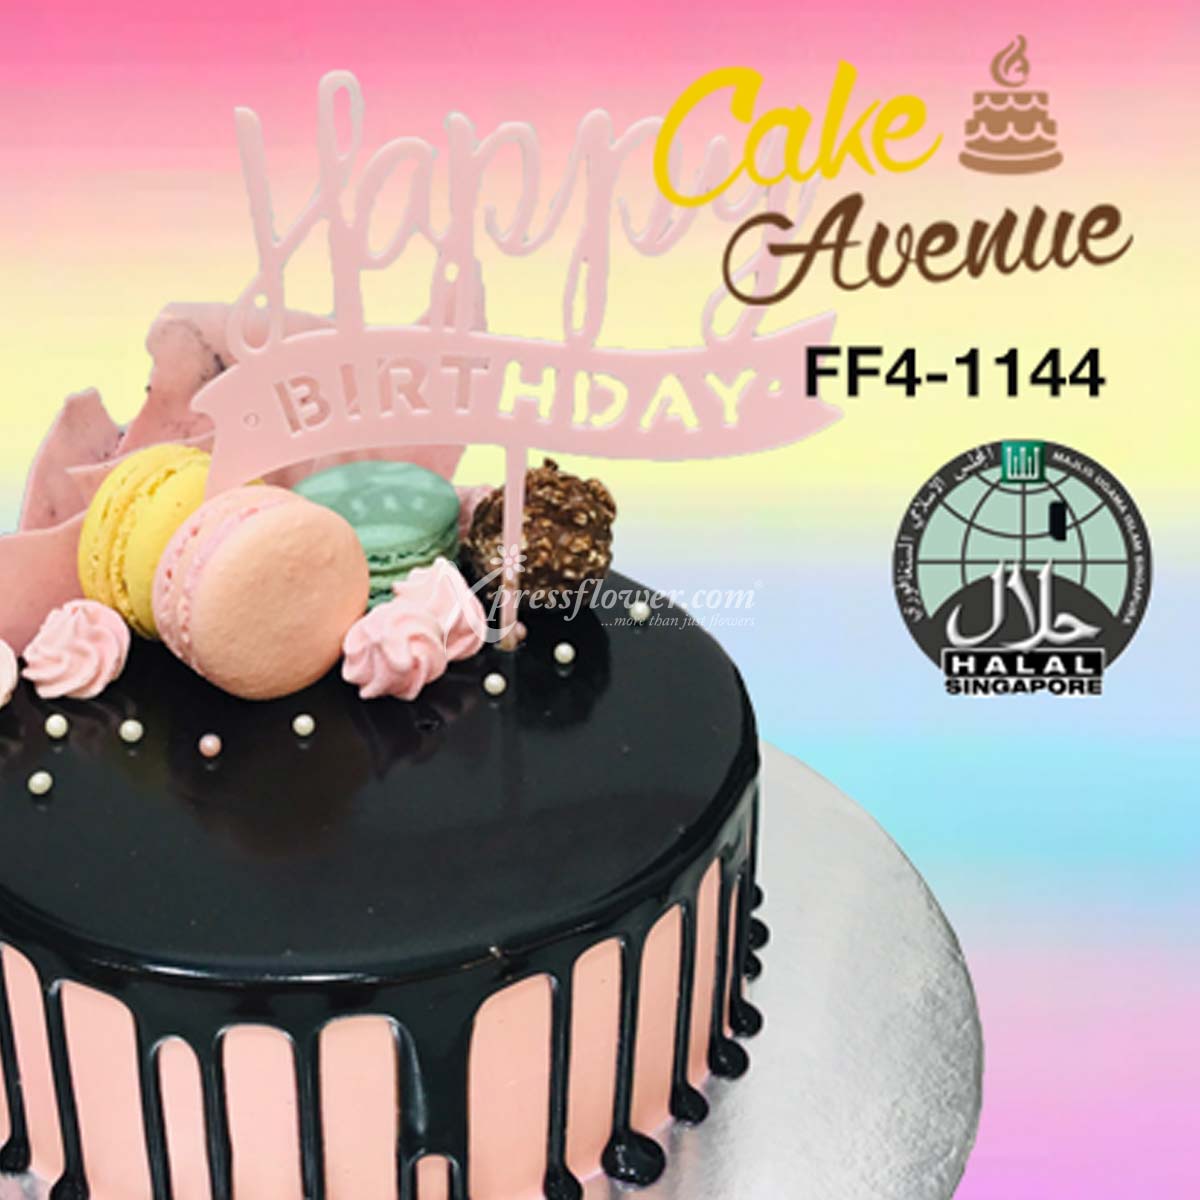 Happy Birthday - Pink (Cake Avenue)